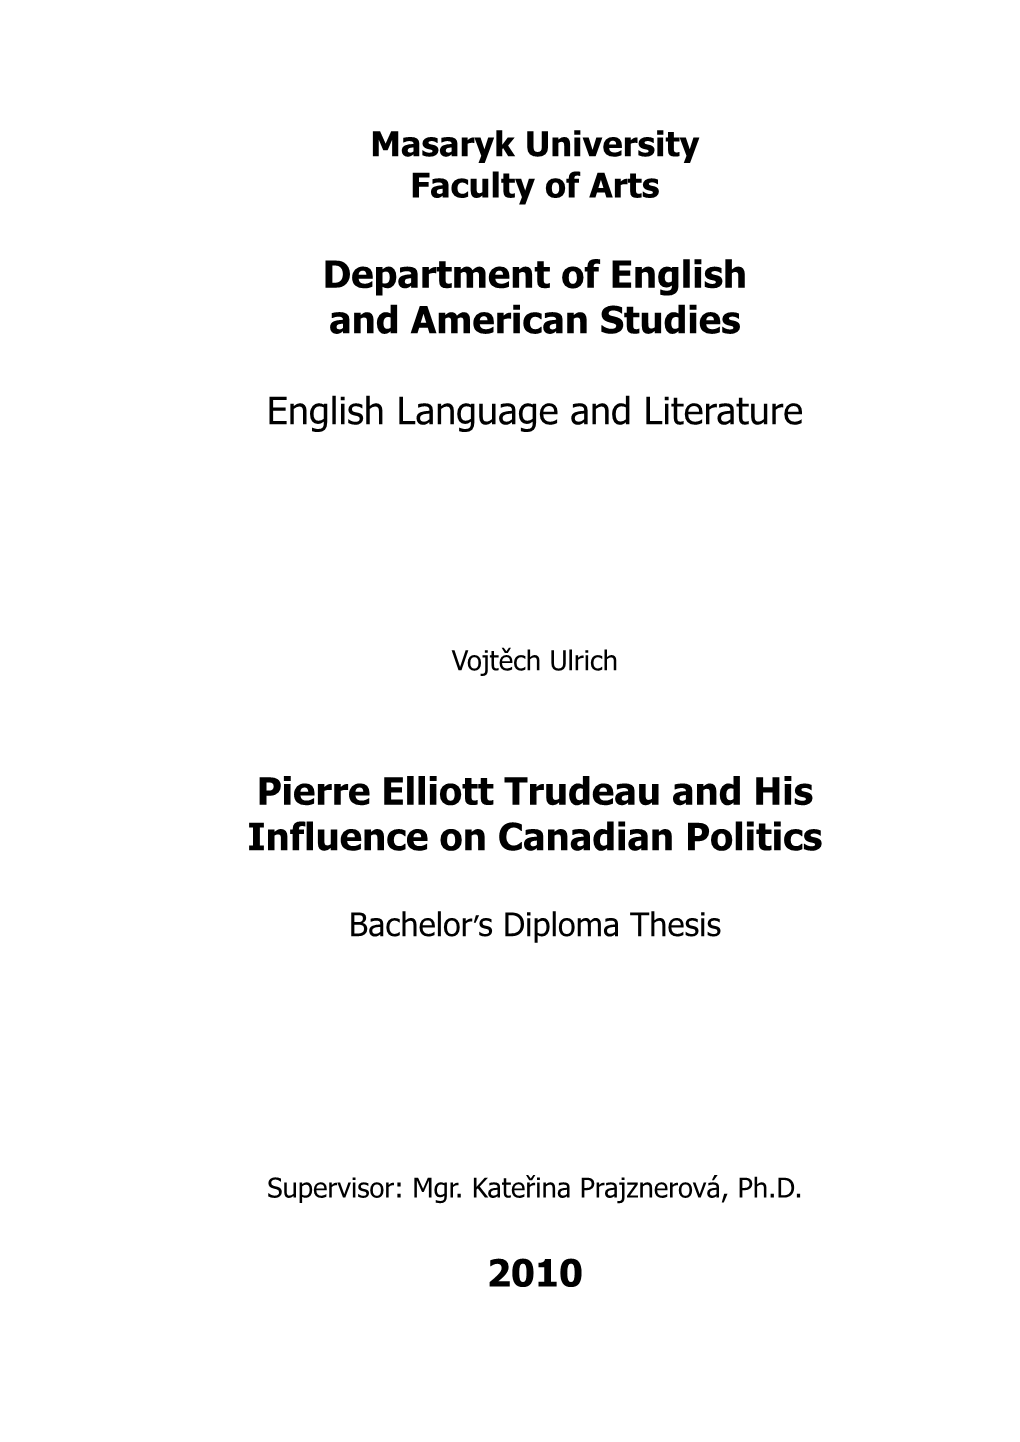 Pierre Elliott Trudeau and His Influence on Canadian Politics